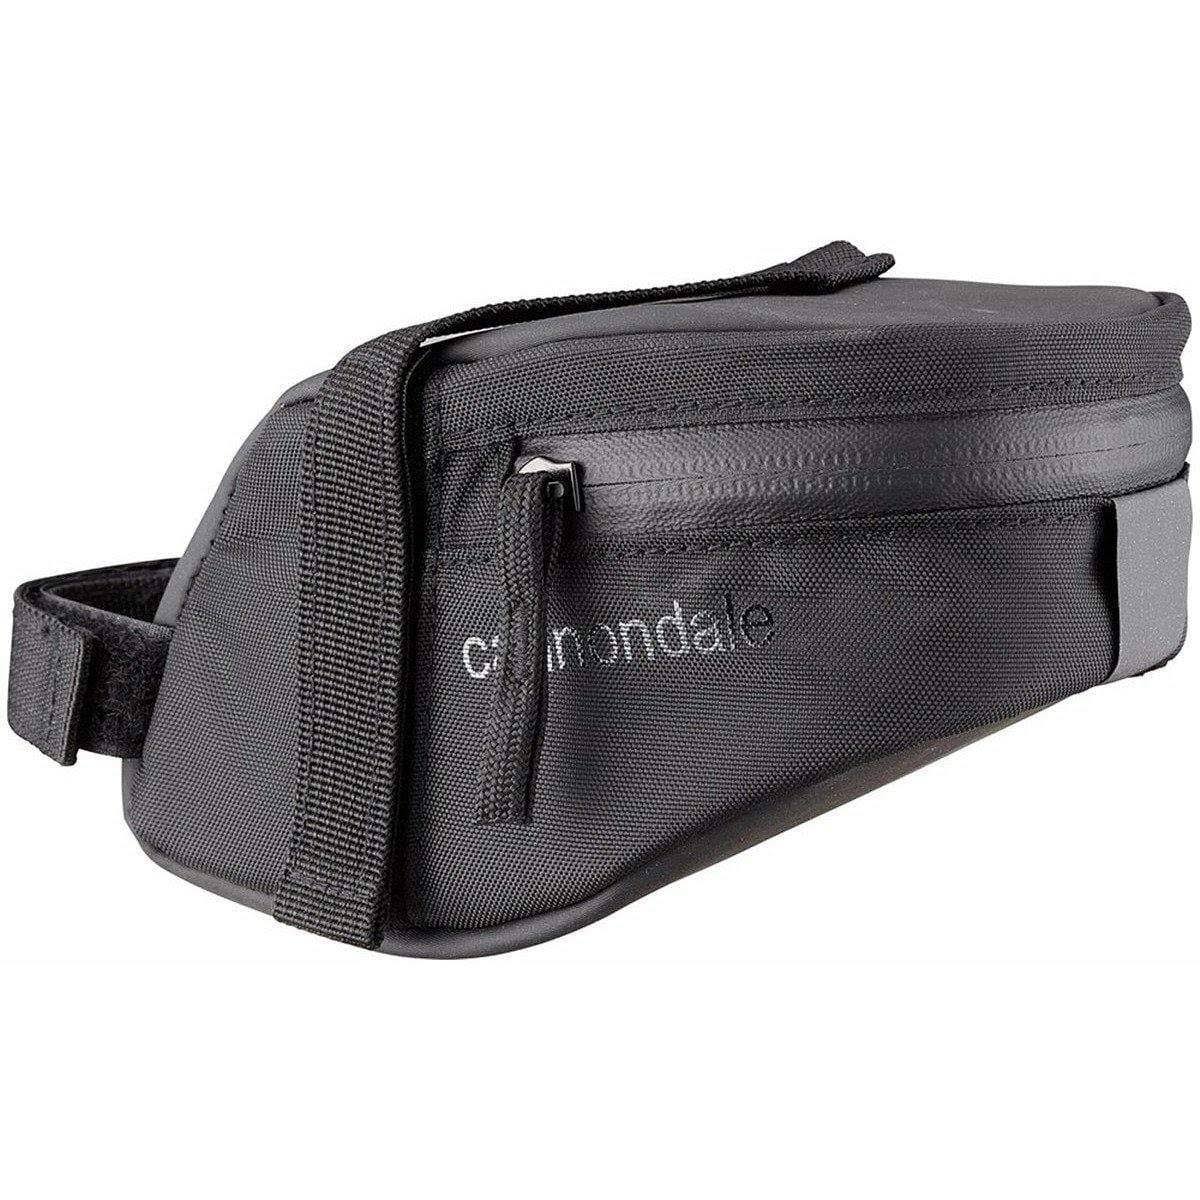 Cannondale Contain Stitched Velcro Medium Saddle Bag